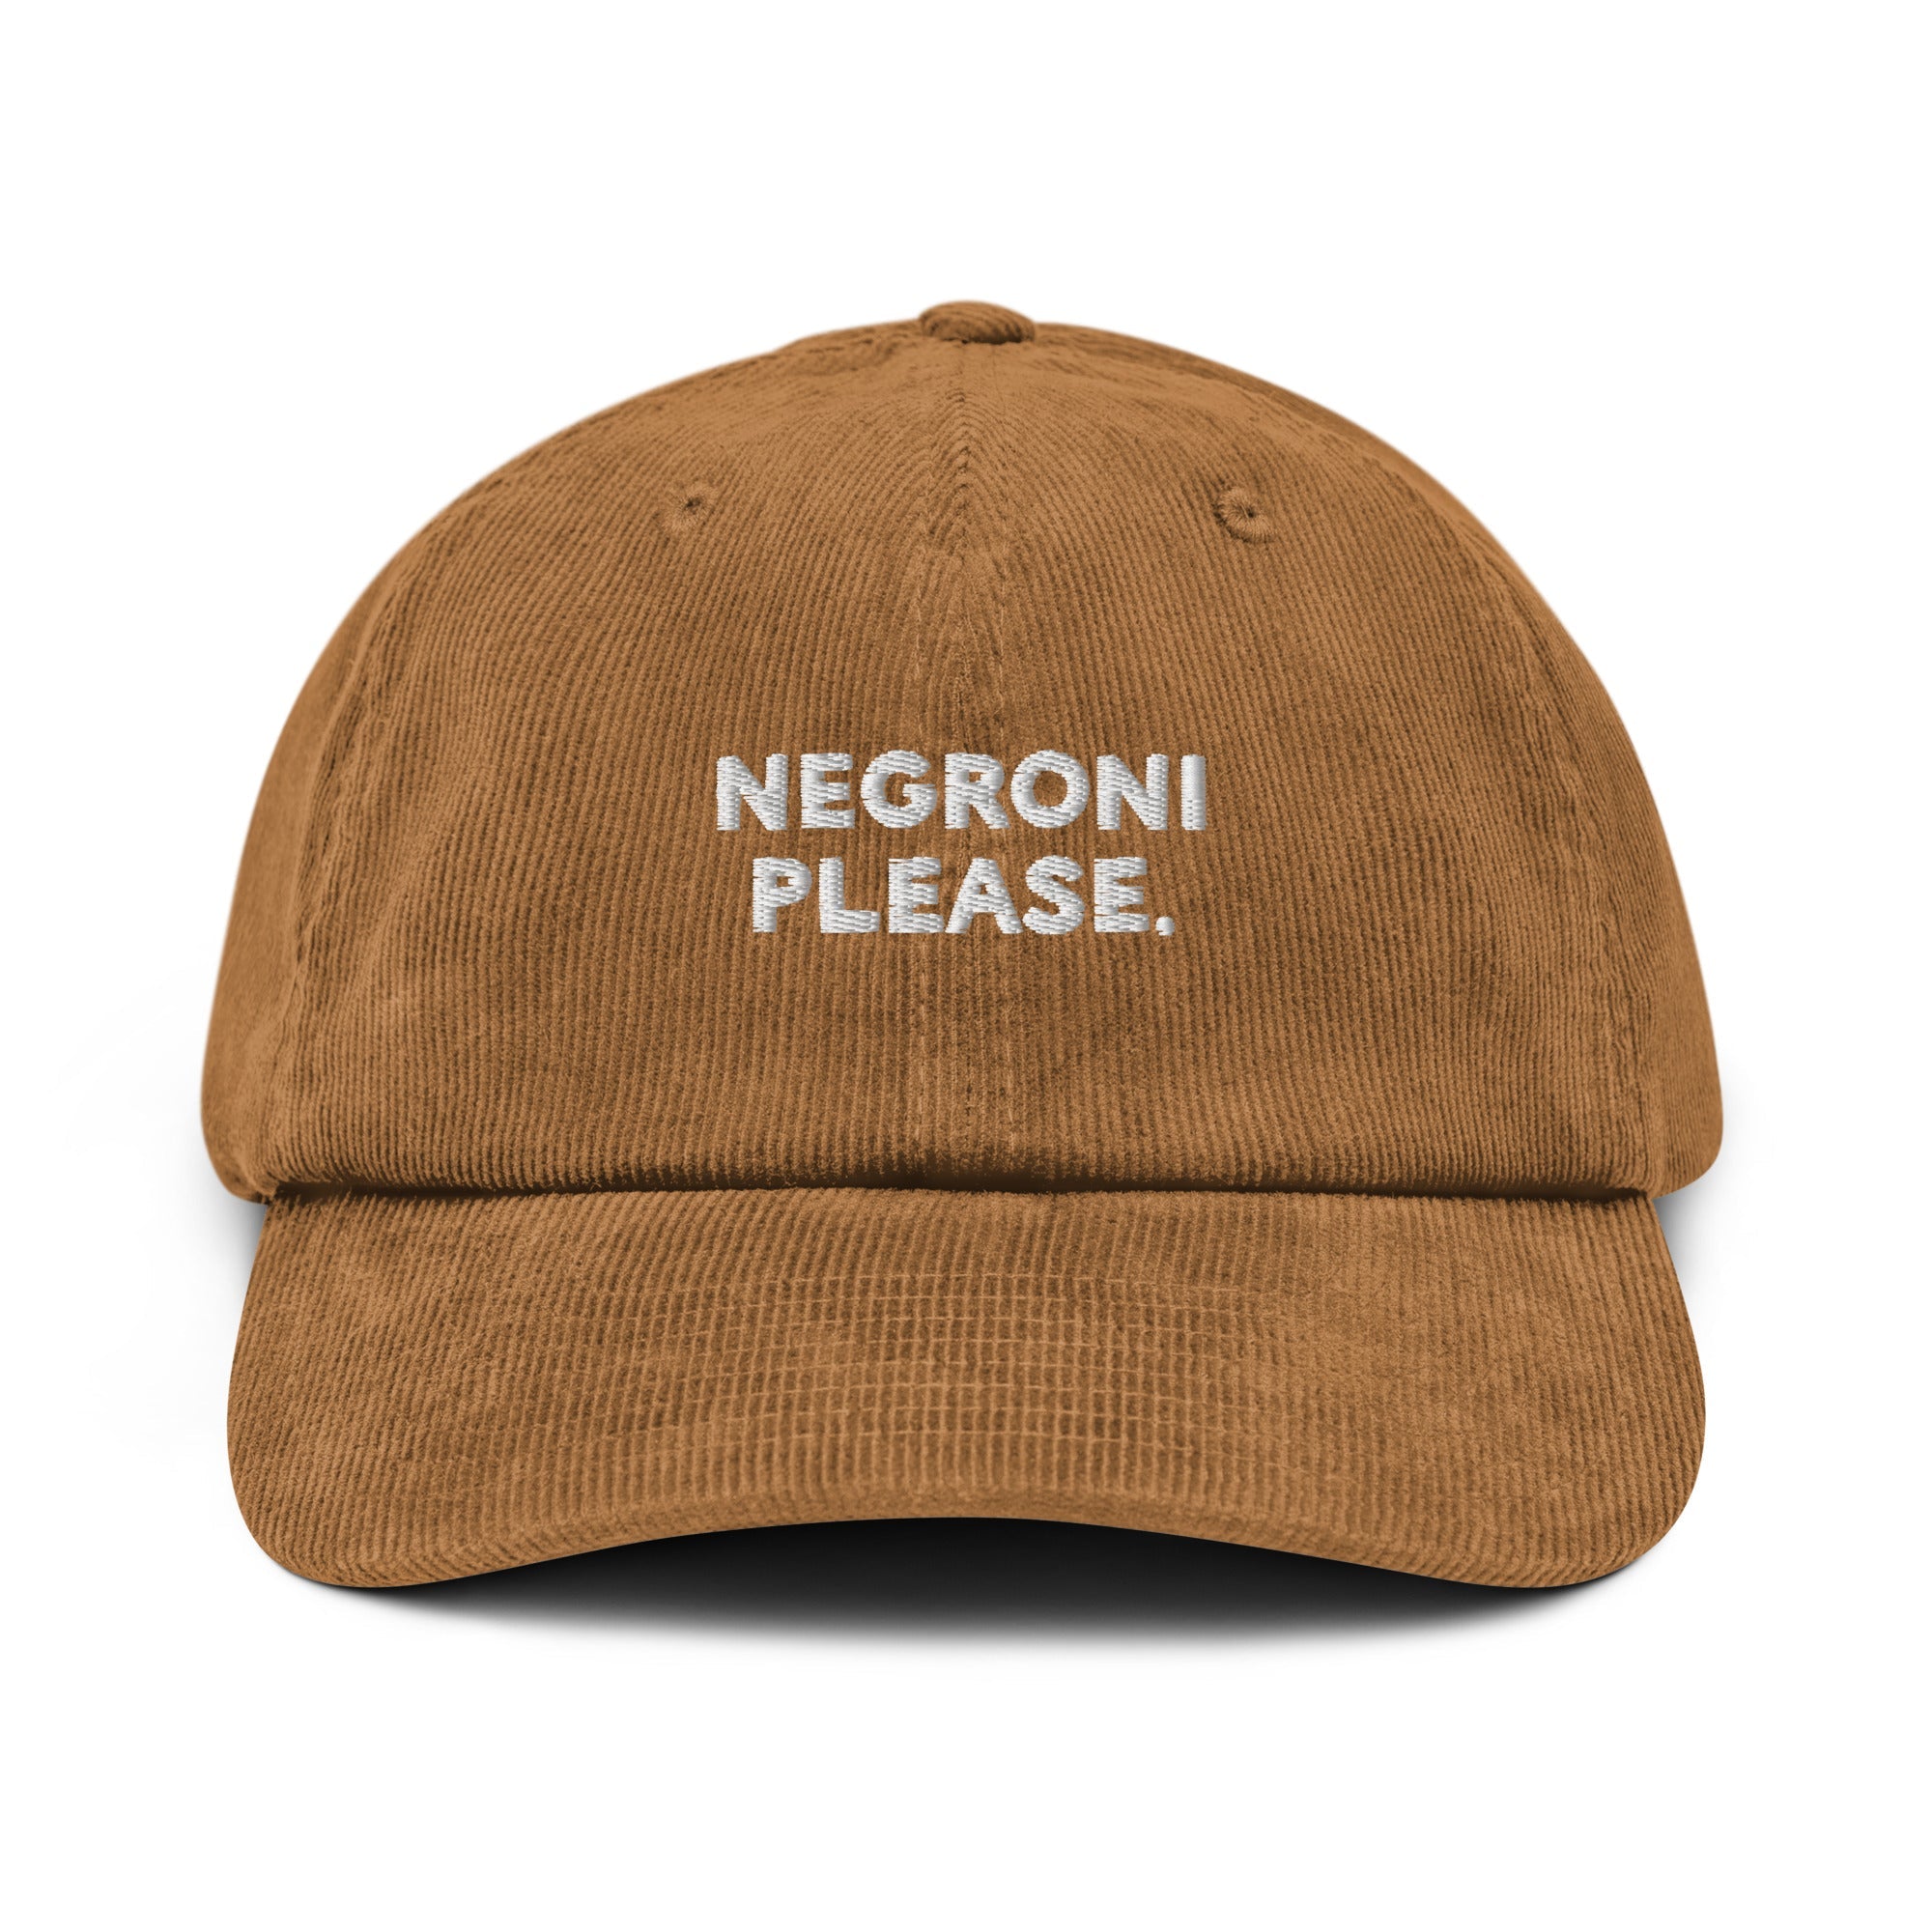 Negroni Please - Corduroy Cap - The Refined Spirit